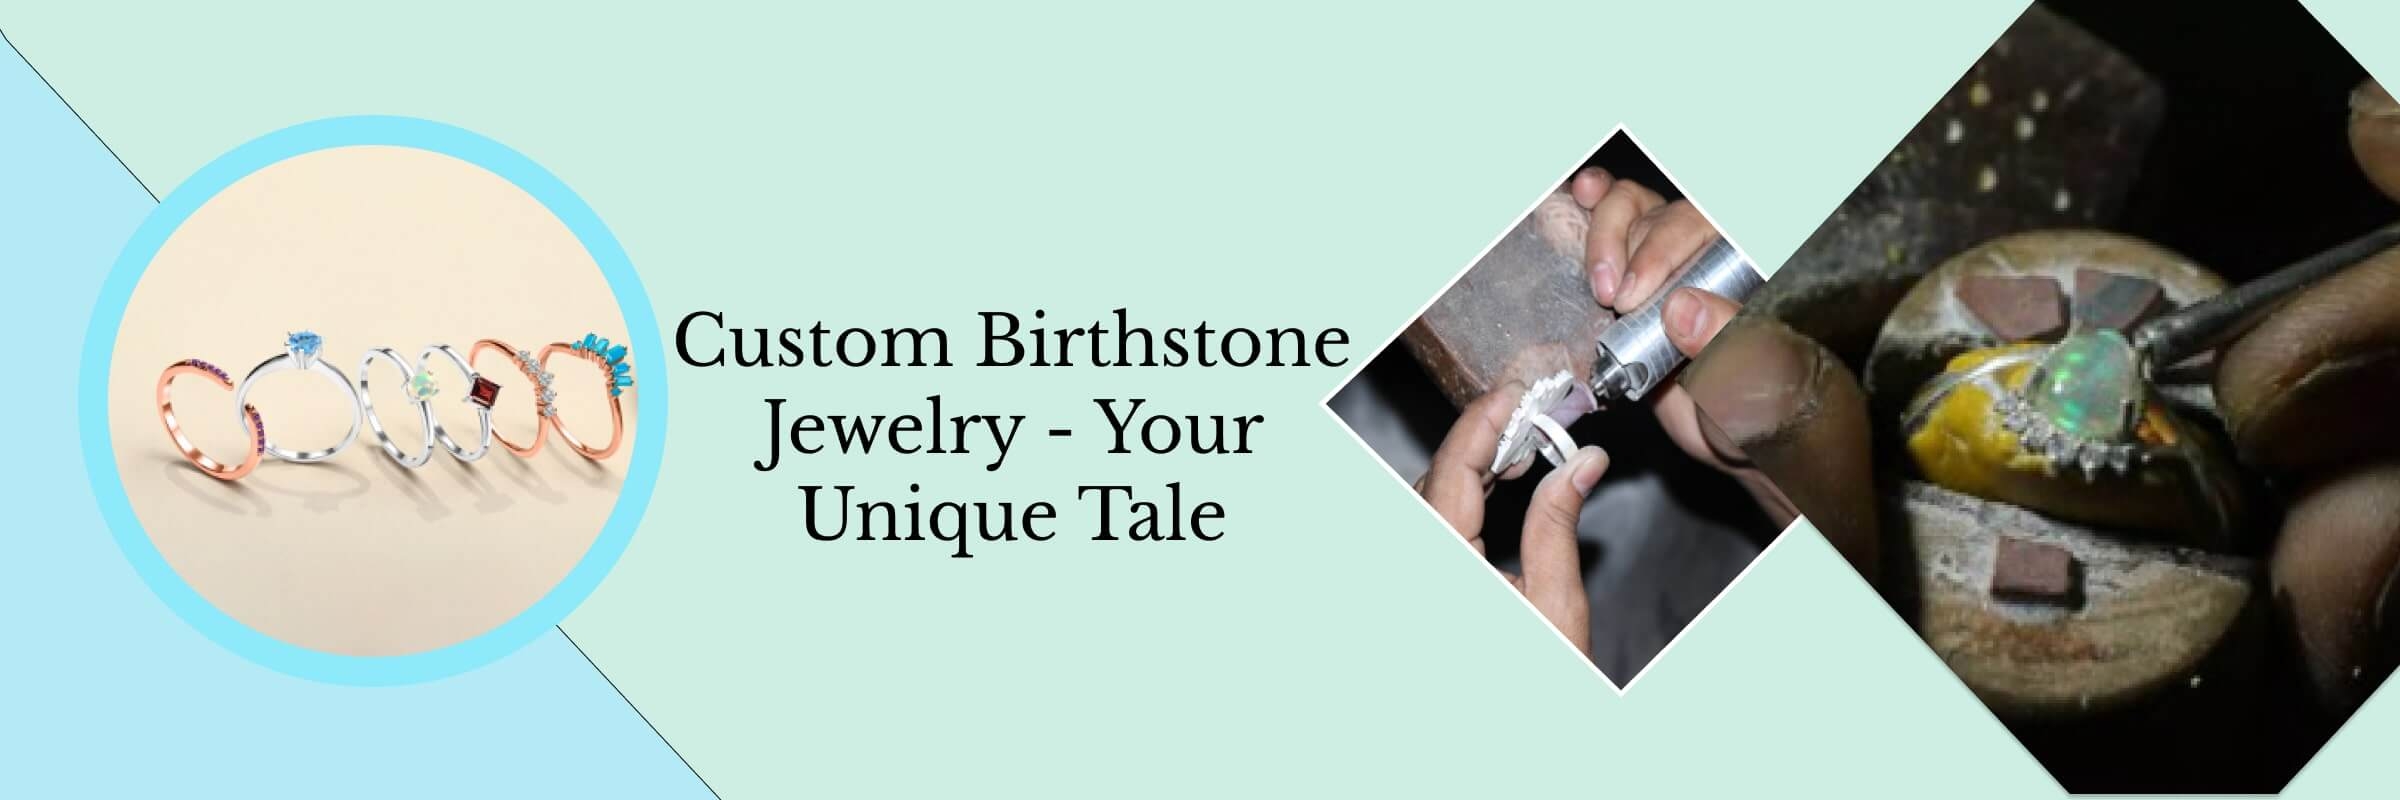 How To Design Custom Birthstone Jewelry